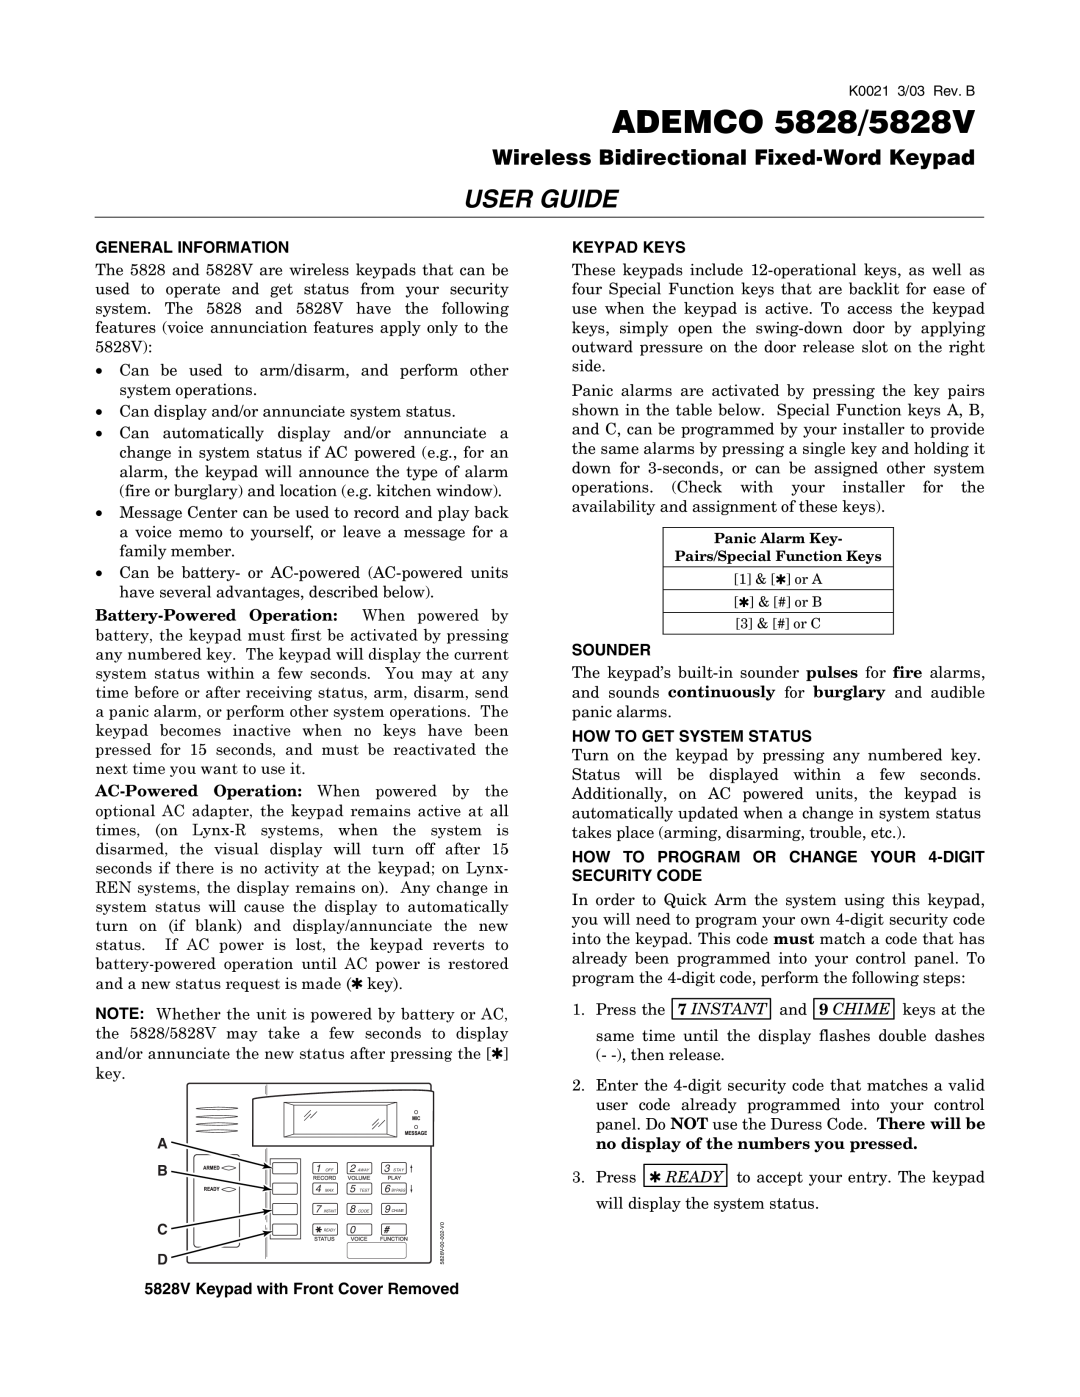 Honeywell manual General Information, 5828V Keypad with Front Cover Removed, Keypad Keys, Sounder, $0&29, User Guide 